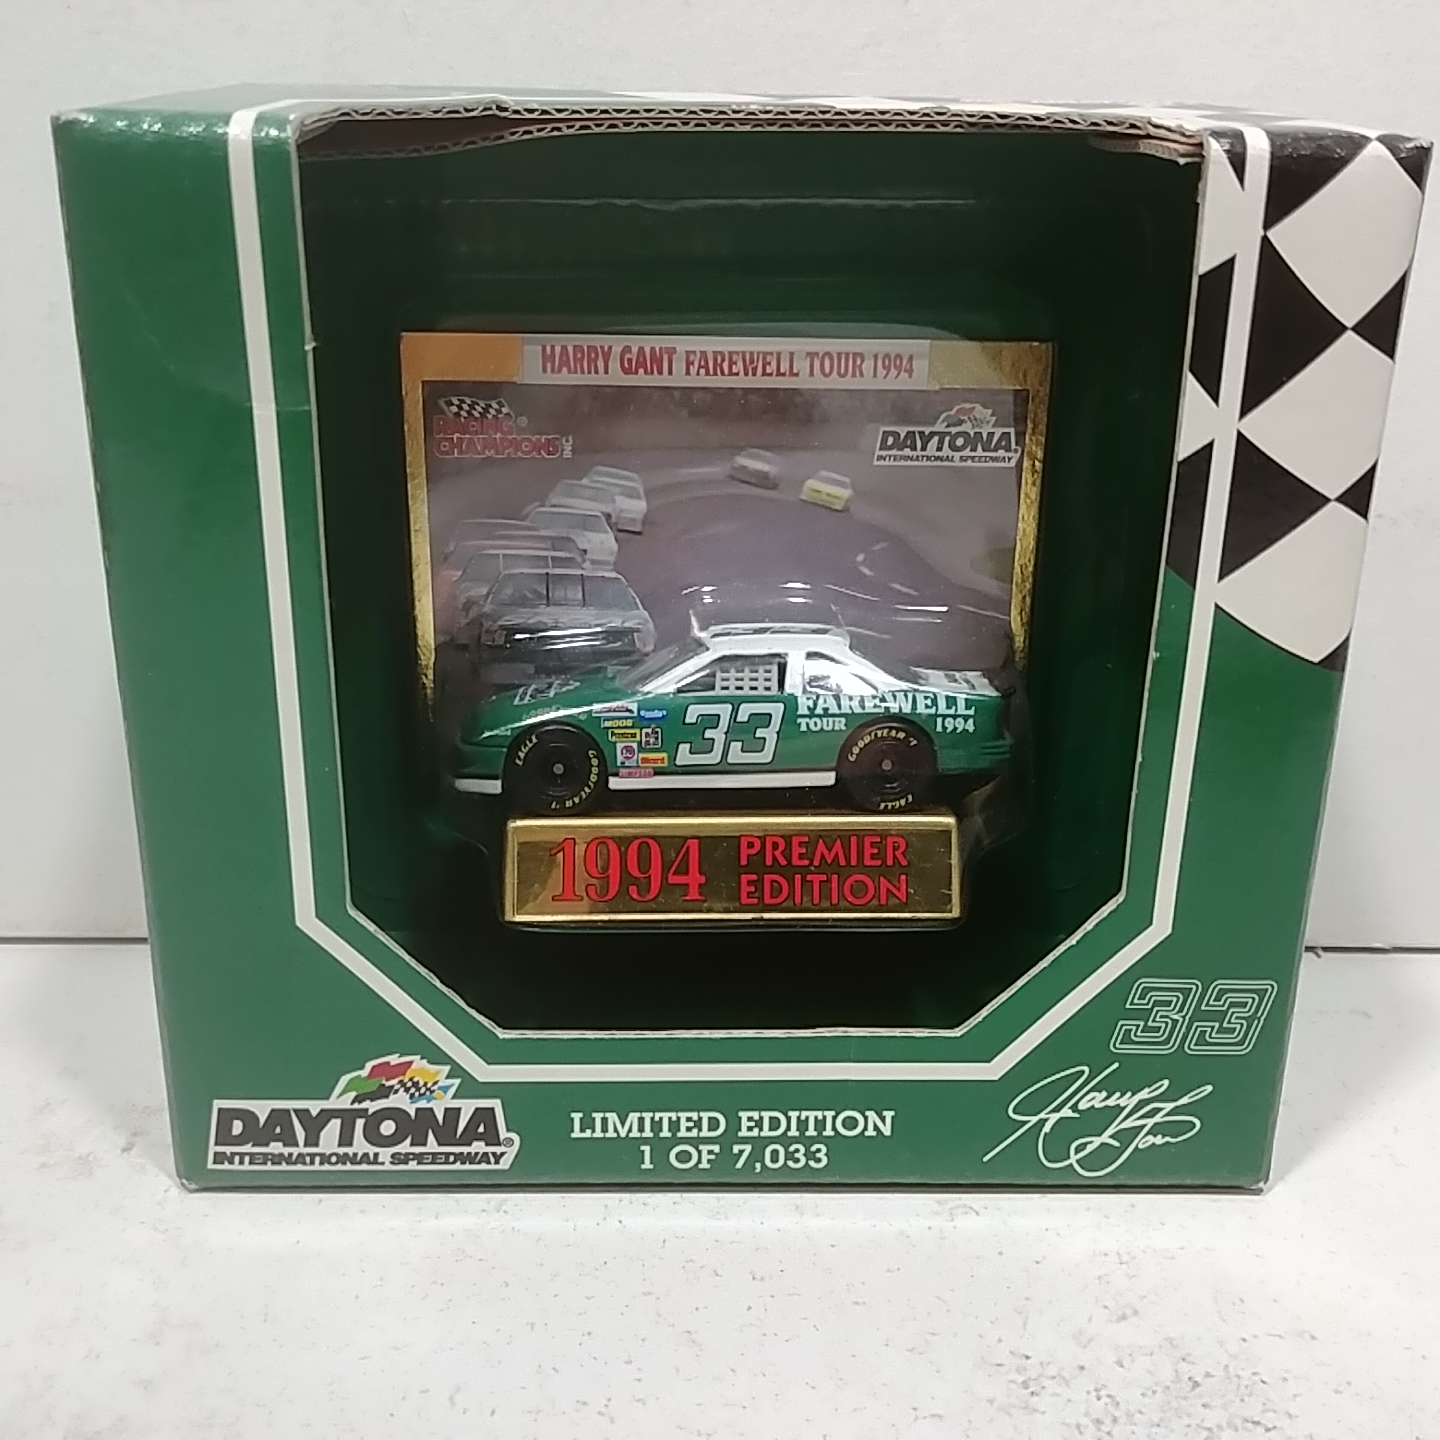 1994 Harry Gant 1/64th Racing Champions "Farewell Tour" Daytona car